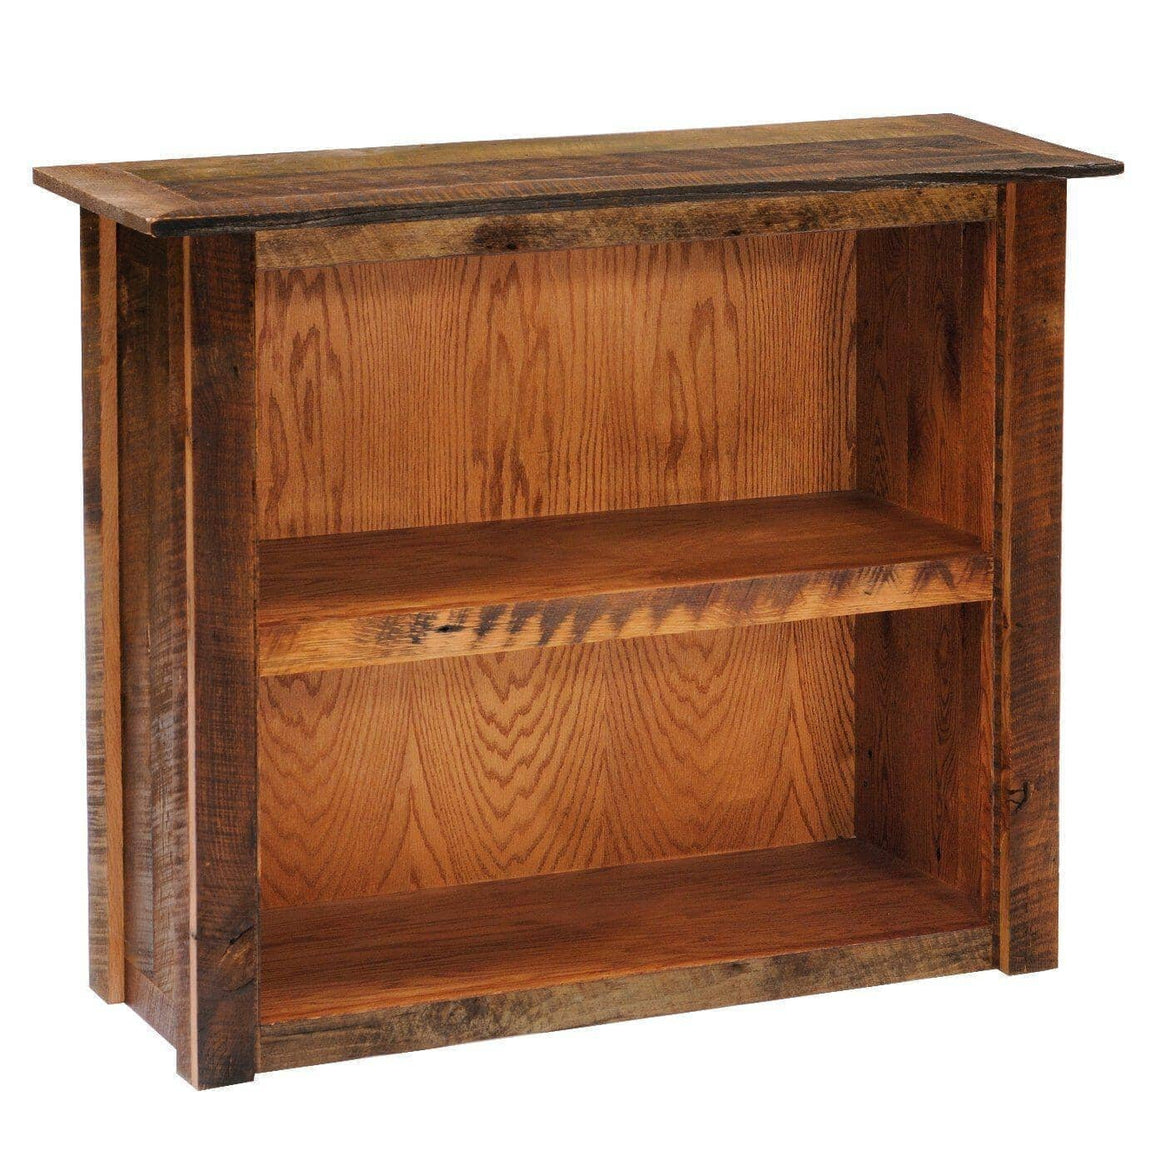 Barnwood Bookshelf - Small, Medium, Large - Rustic Deco Incorporated